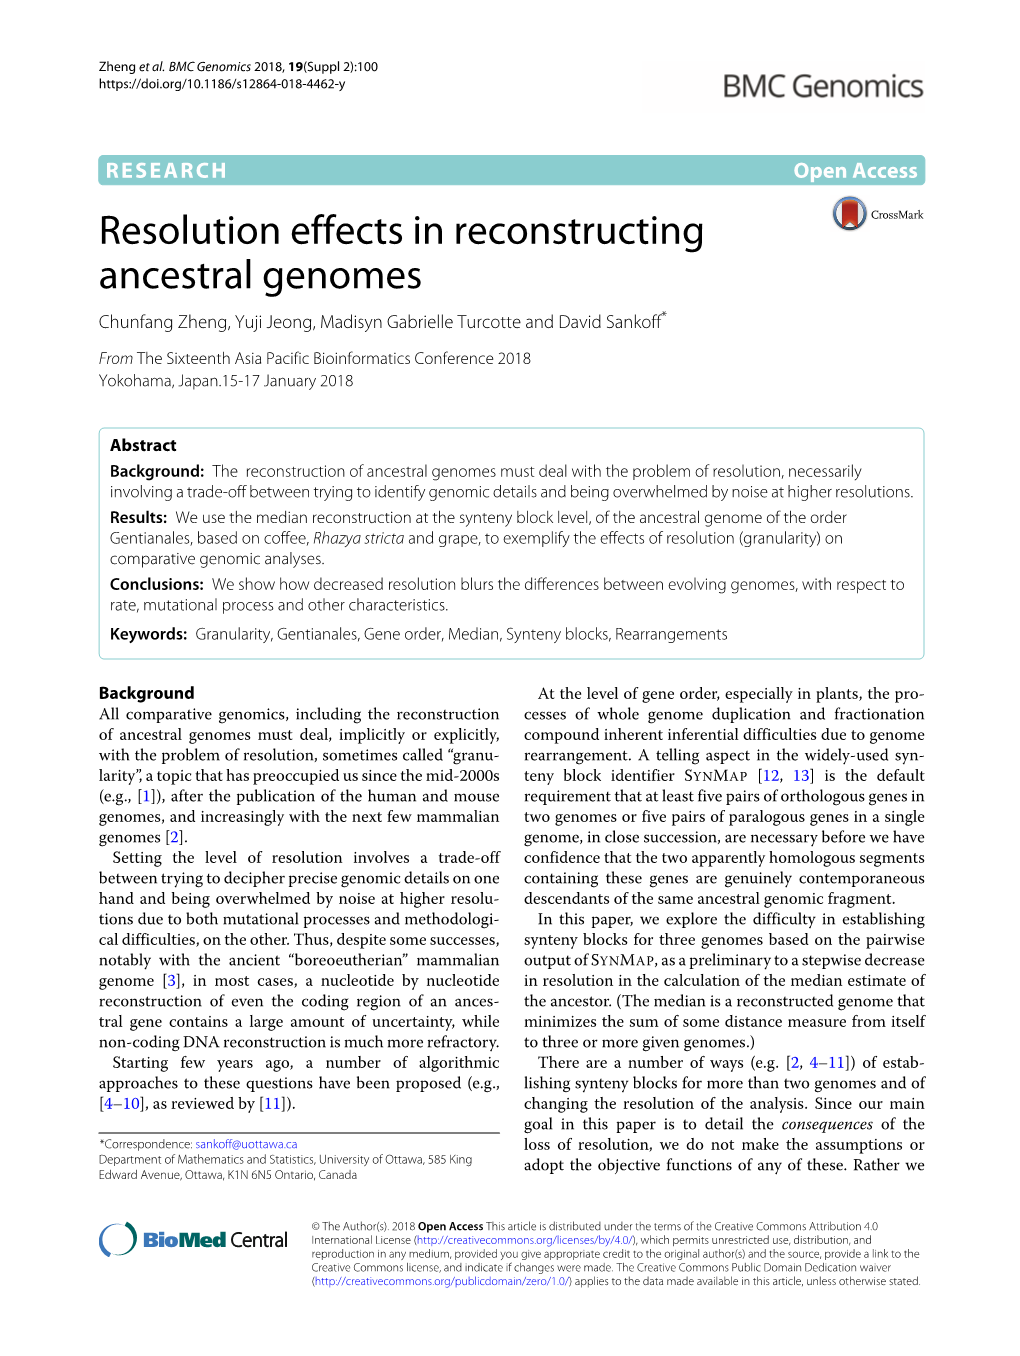 Resolution Effects in Reconstructing Ancestral Genomes Chunfang Zheng, Yuji Jeong, Madisyn Gabrielle Turcotte and David Sankoff*